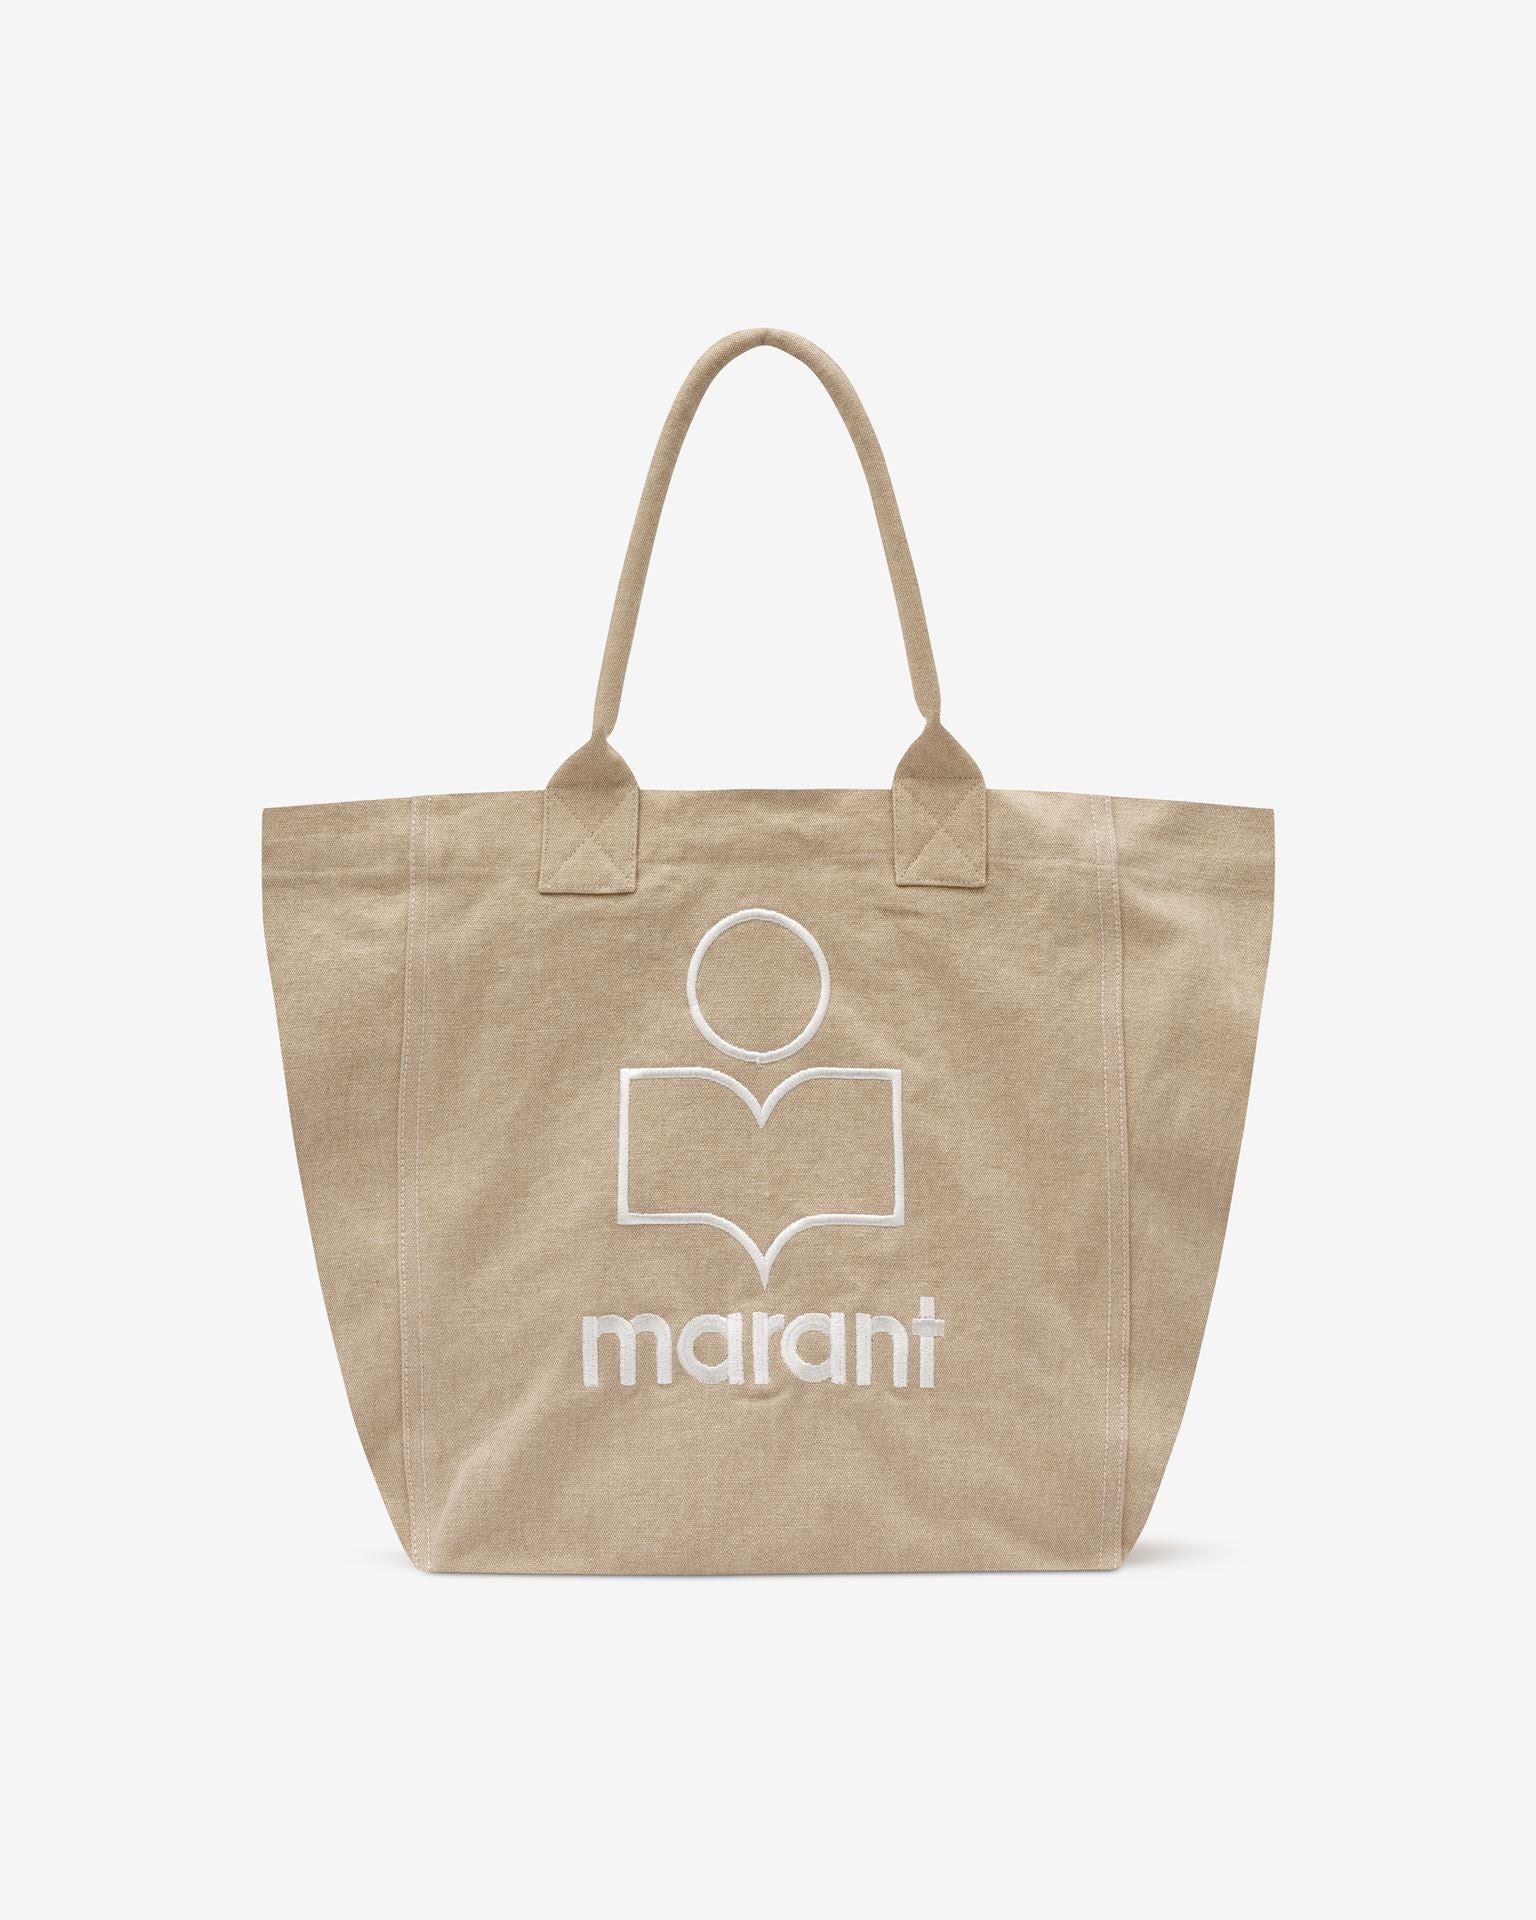 Isabel Marant + Yenky Logo Tote Bag